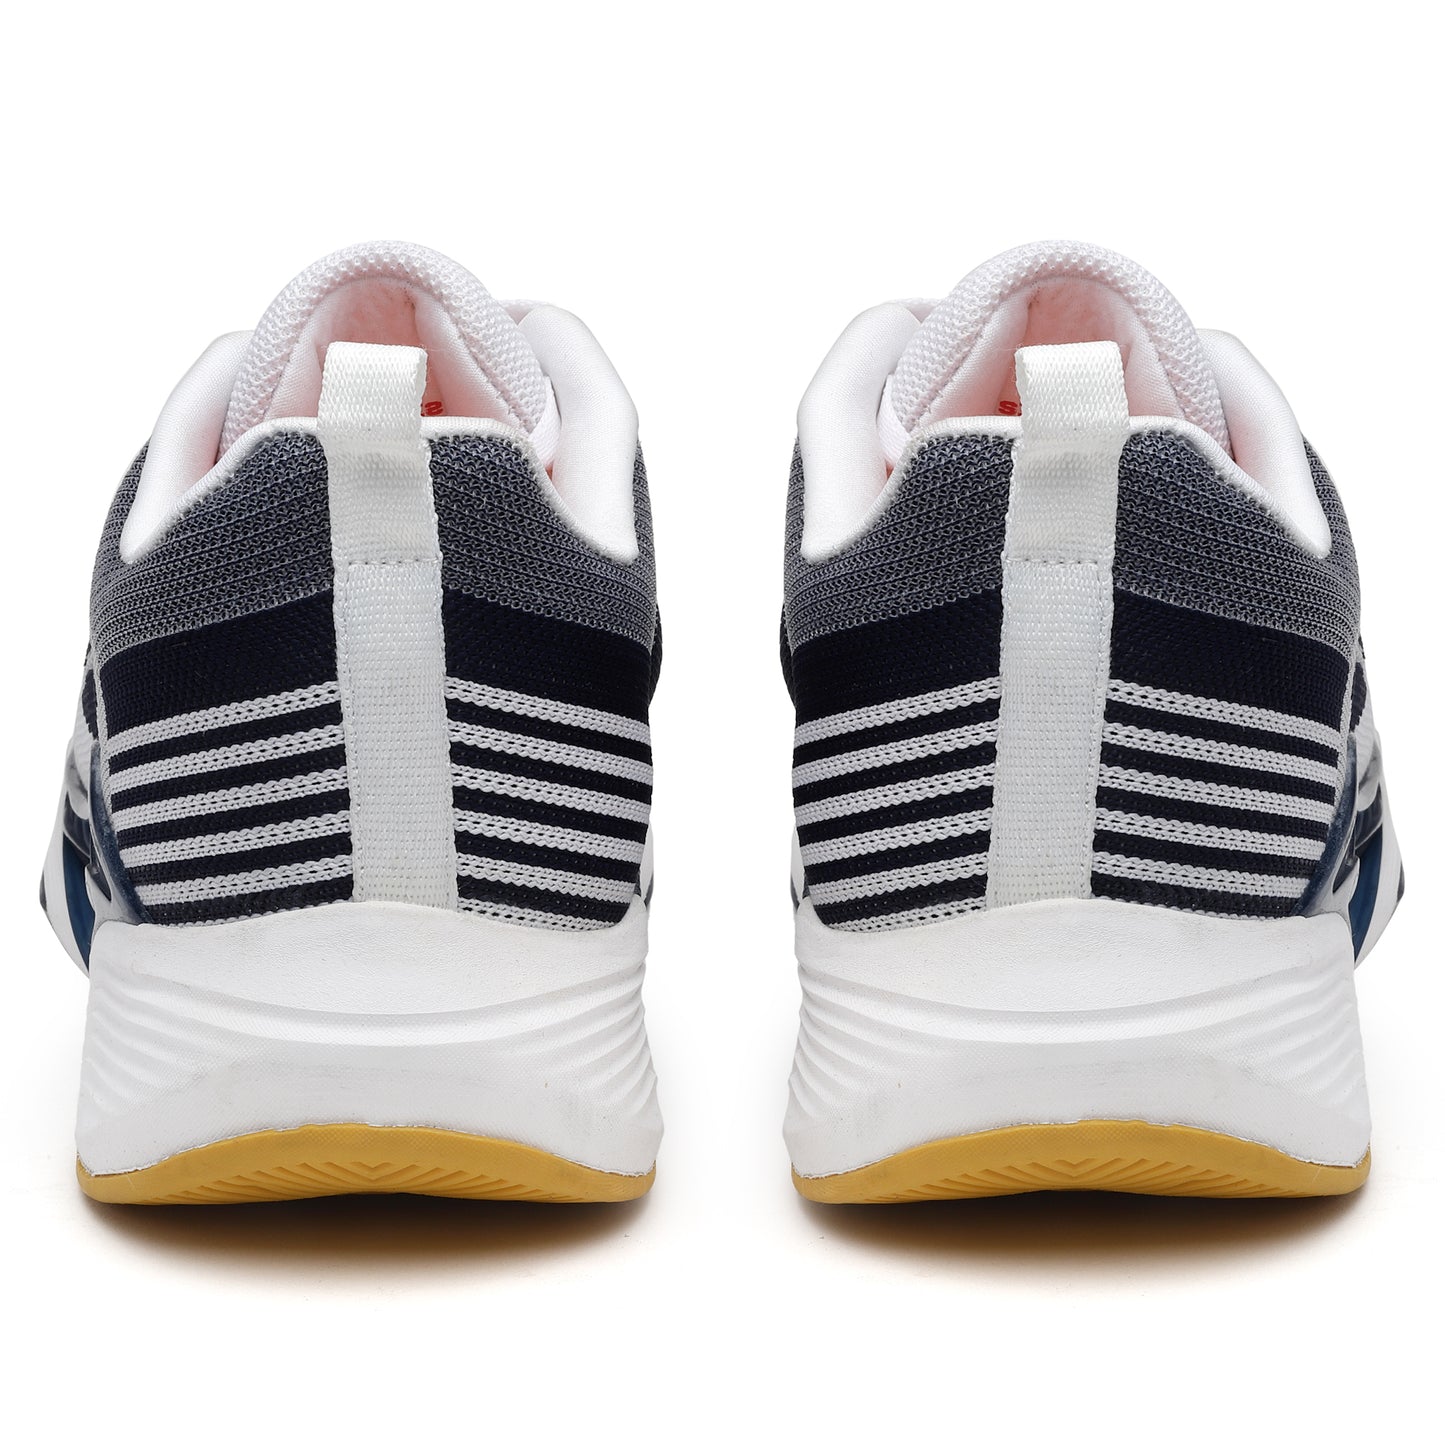 Vomax Sports PL-5001 Enhanced Durability Running Shoes for Men